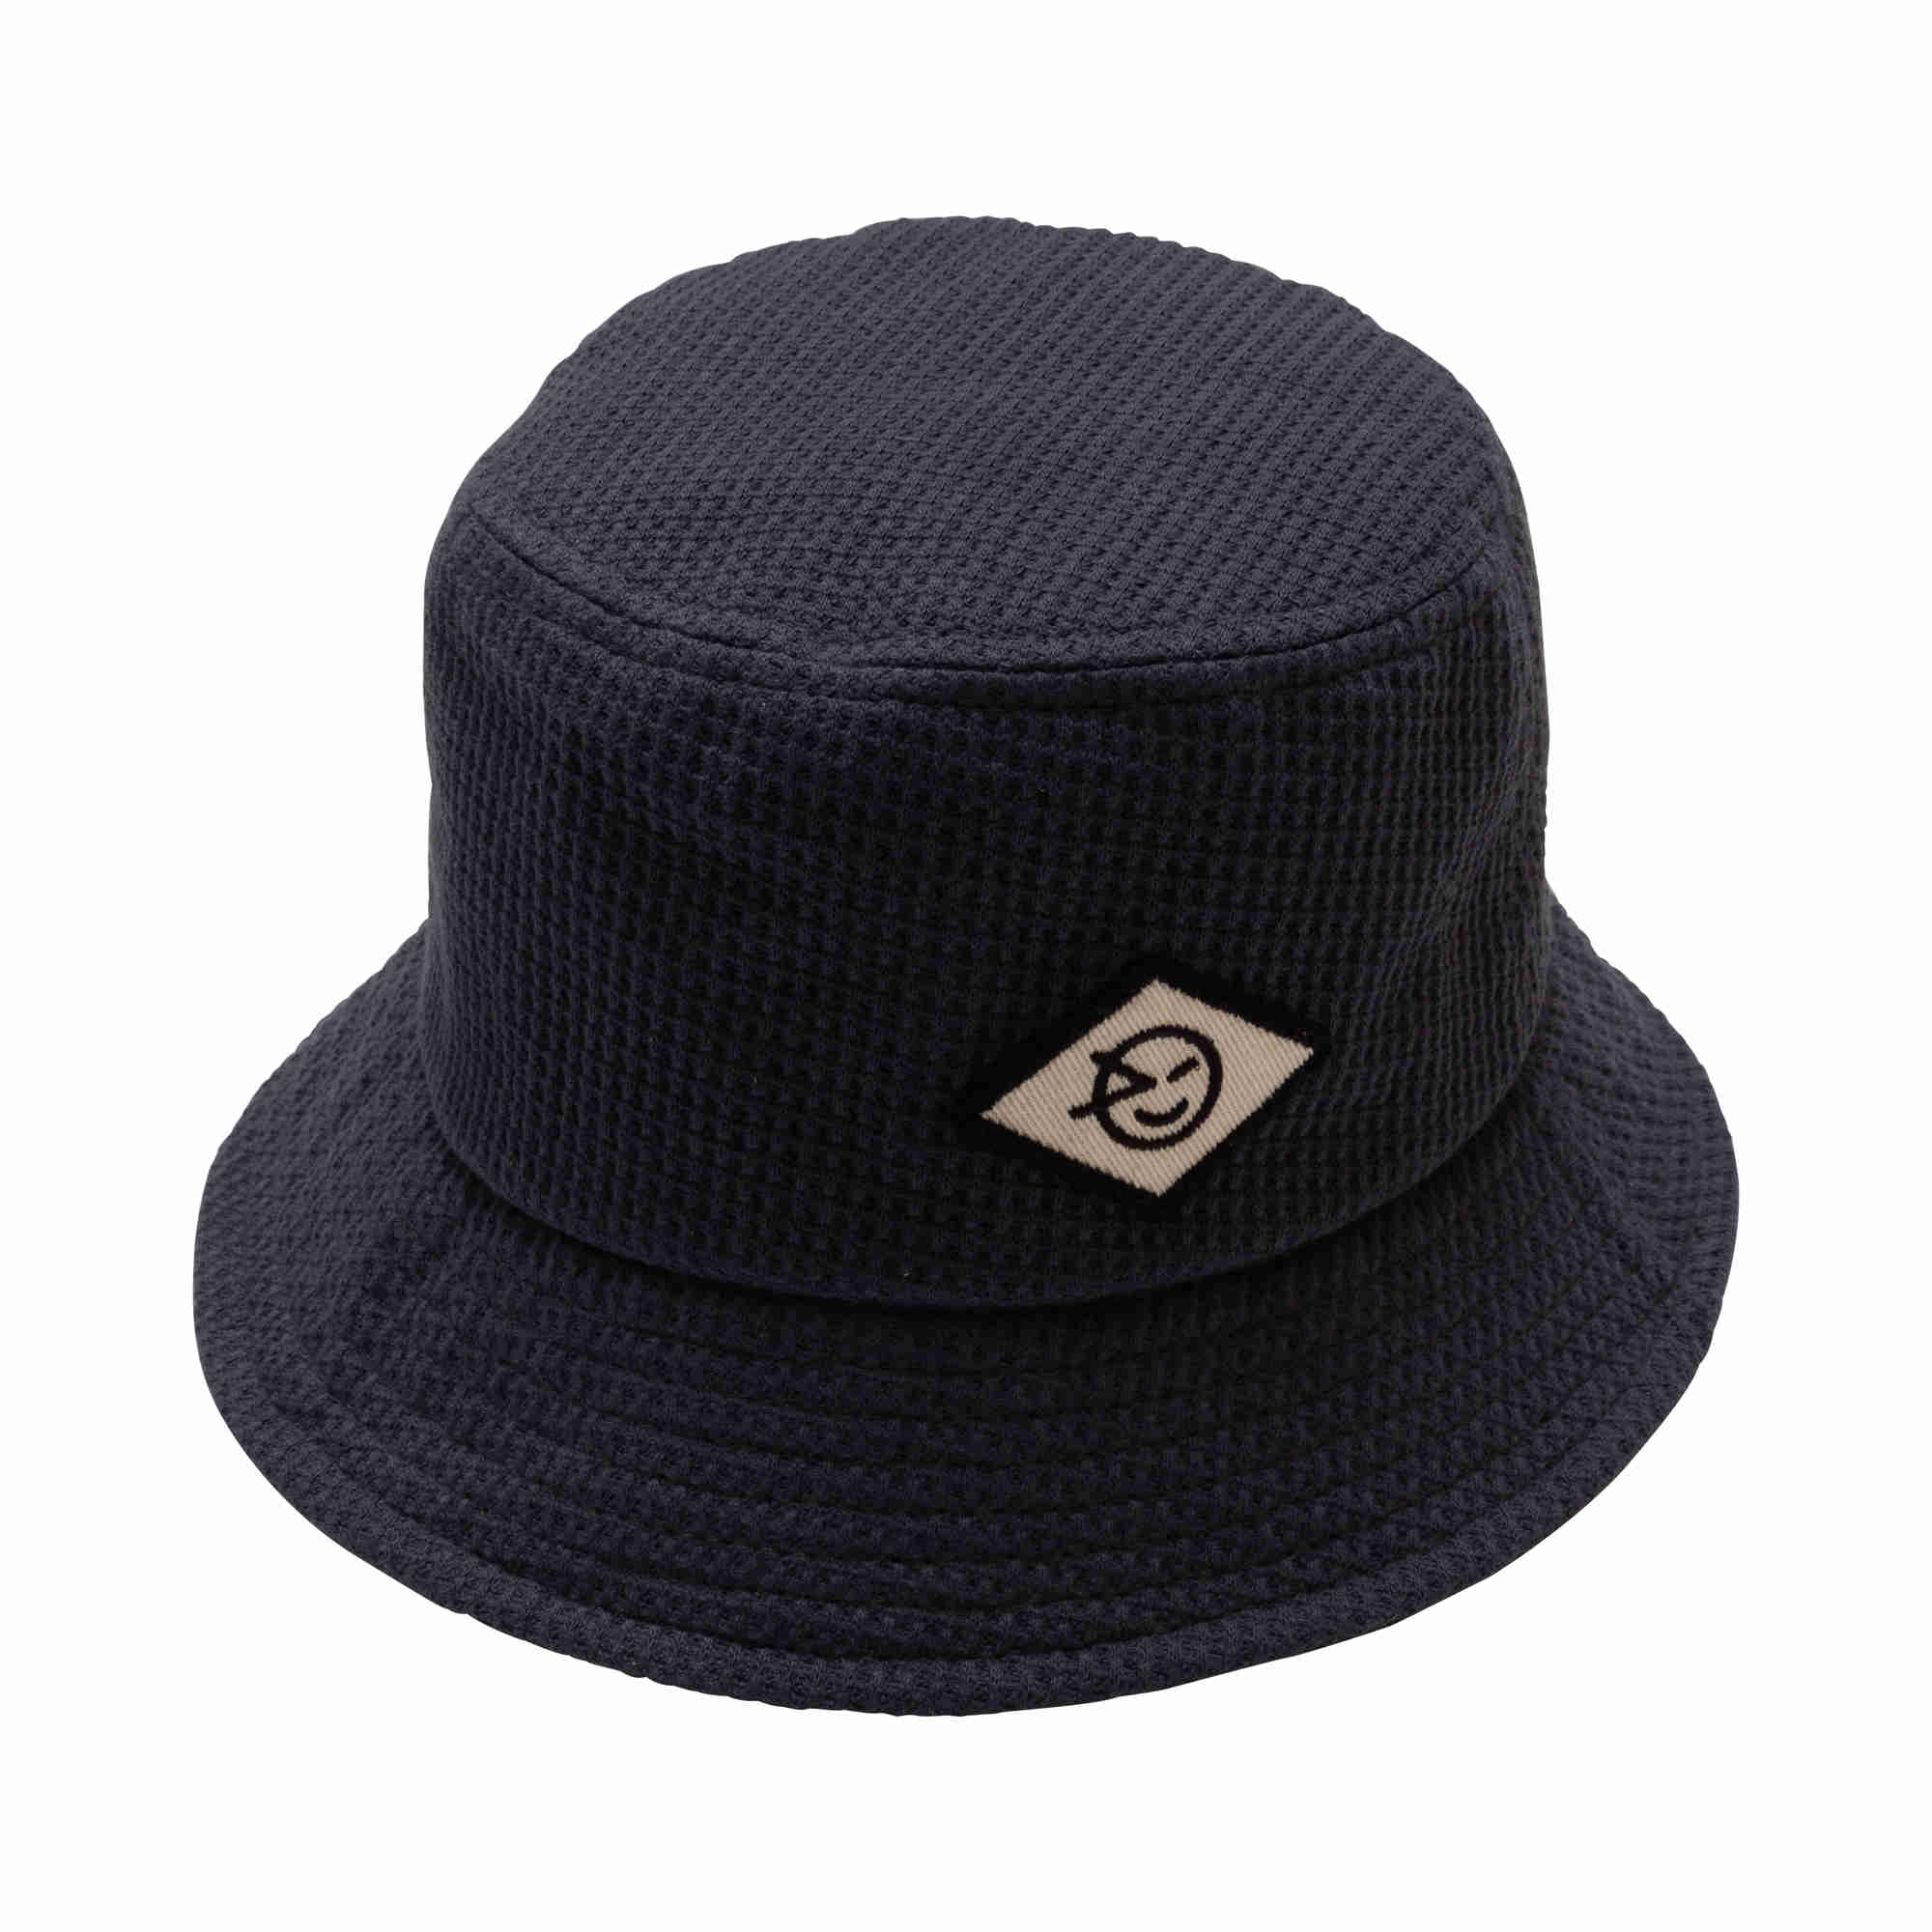 Boys & Girls Black Sun Hat